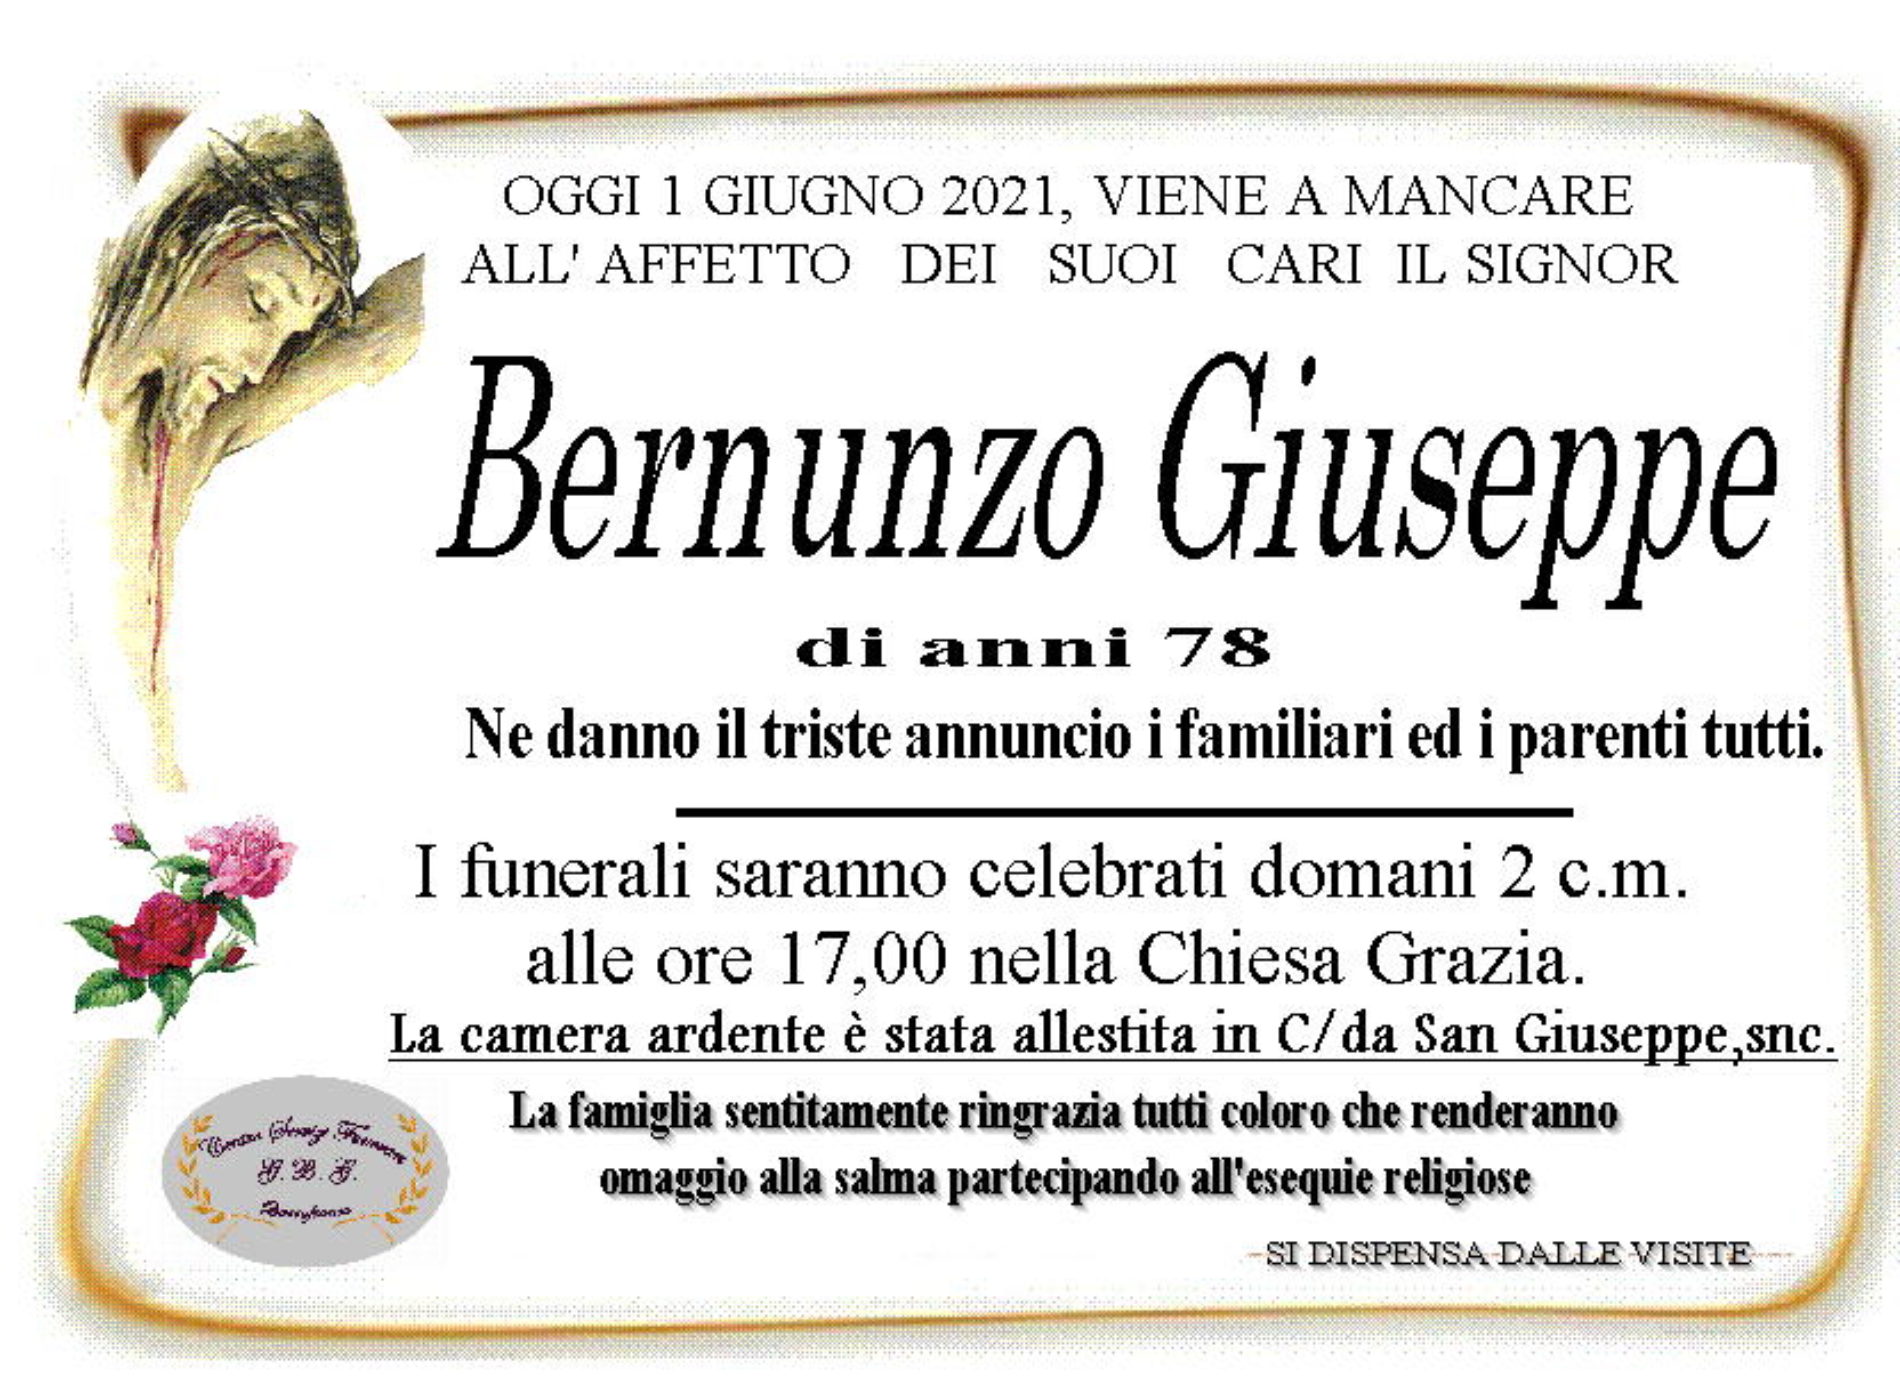 Annuncio servizi funerari agenzia G.B.G. sig. Bernunzo Giuseppe di anni 78